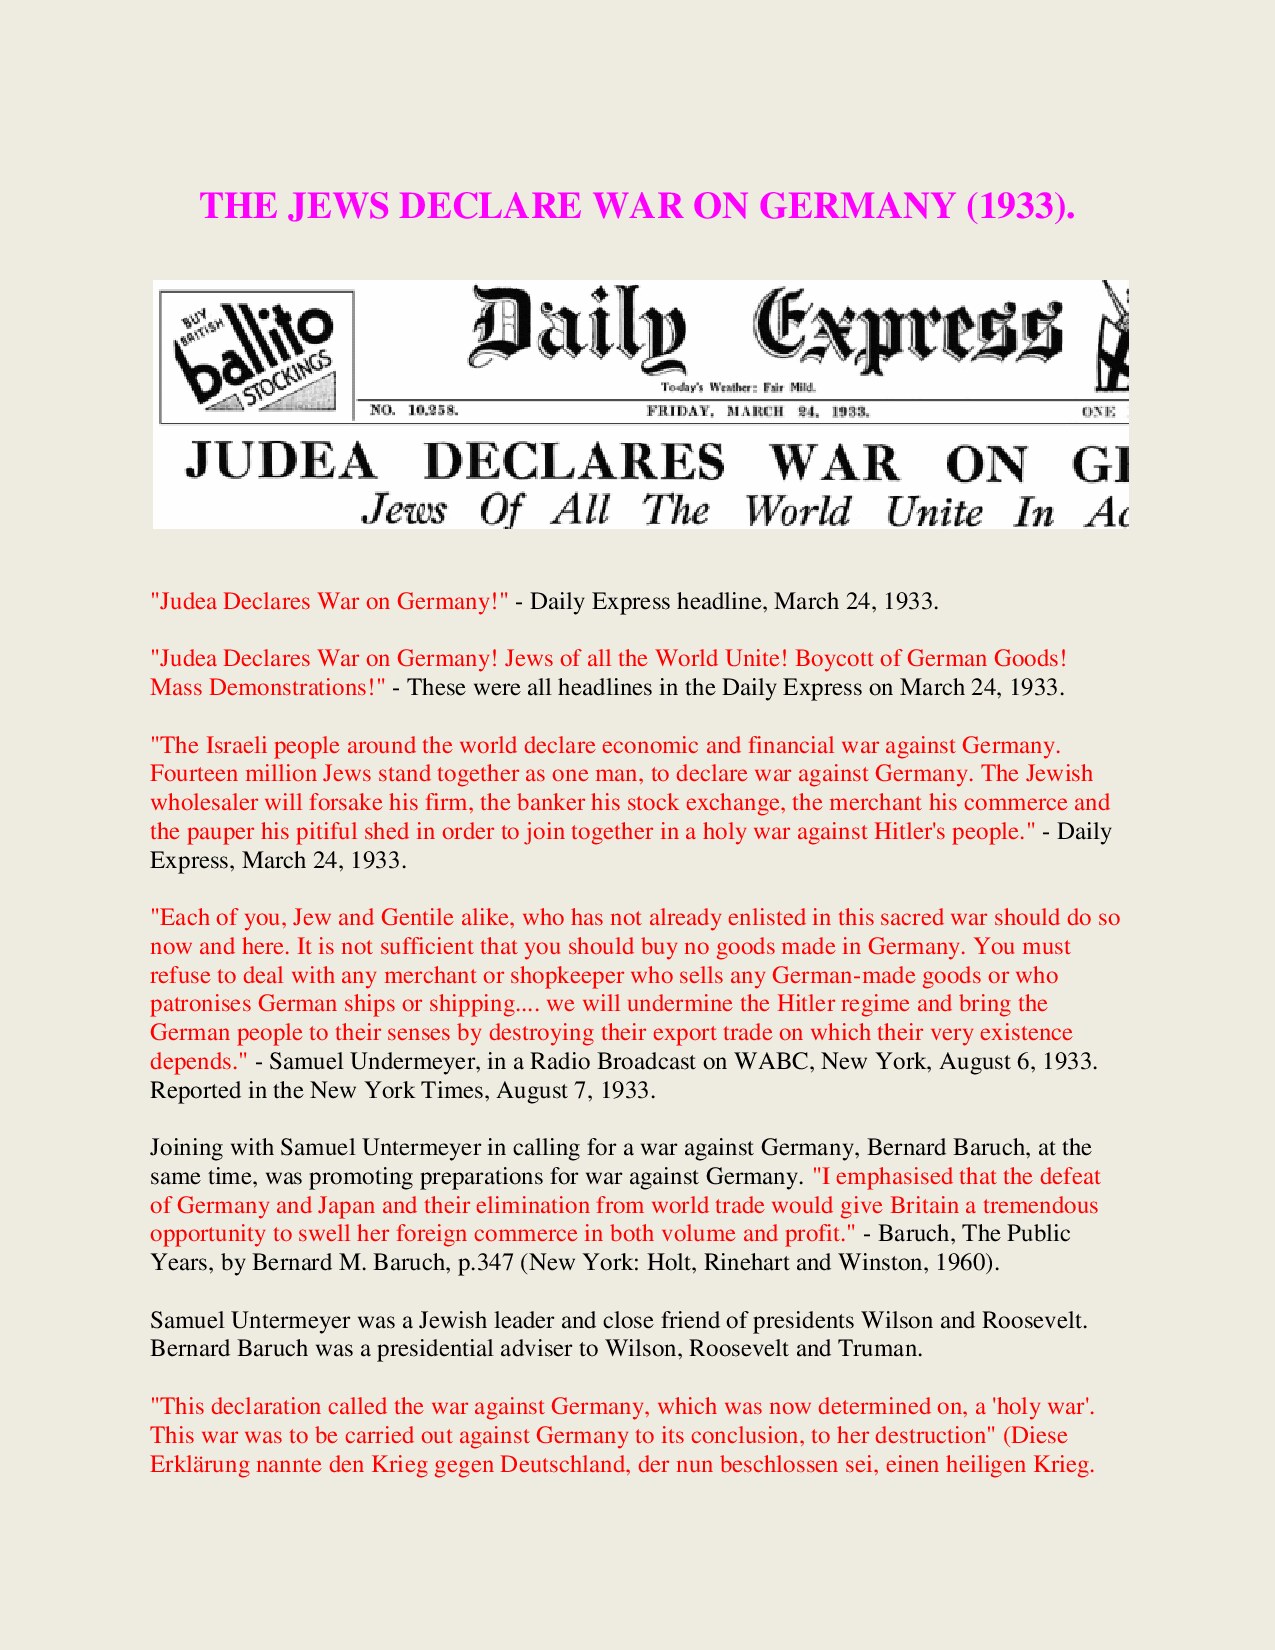 CODOH.com; Jews Declare War On Germany 1933